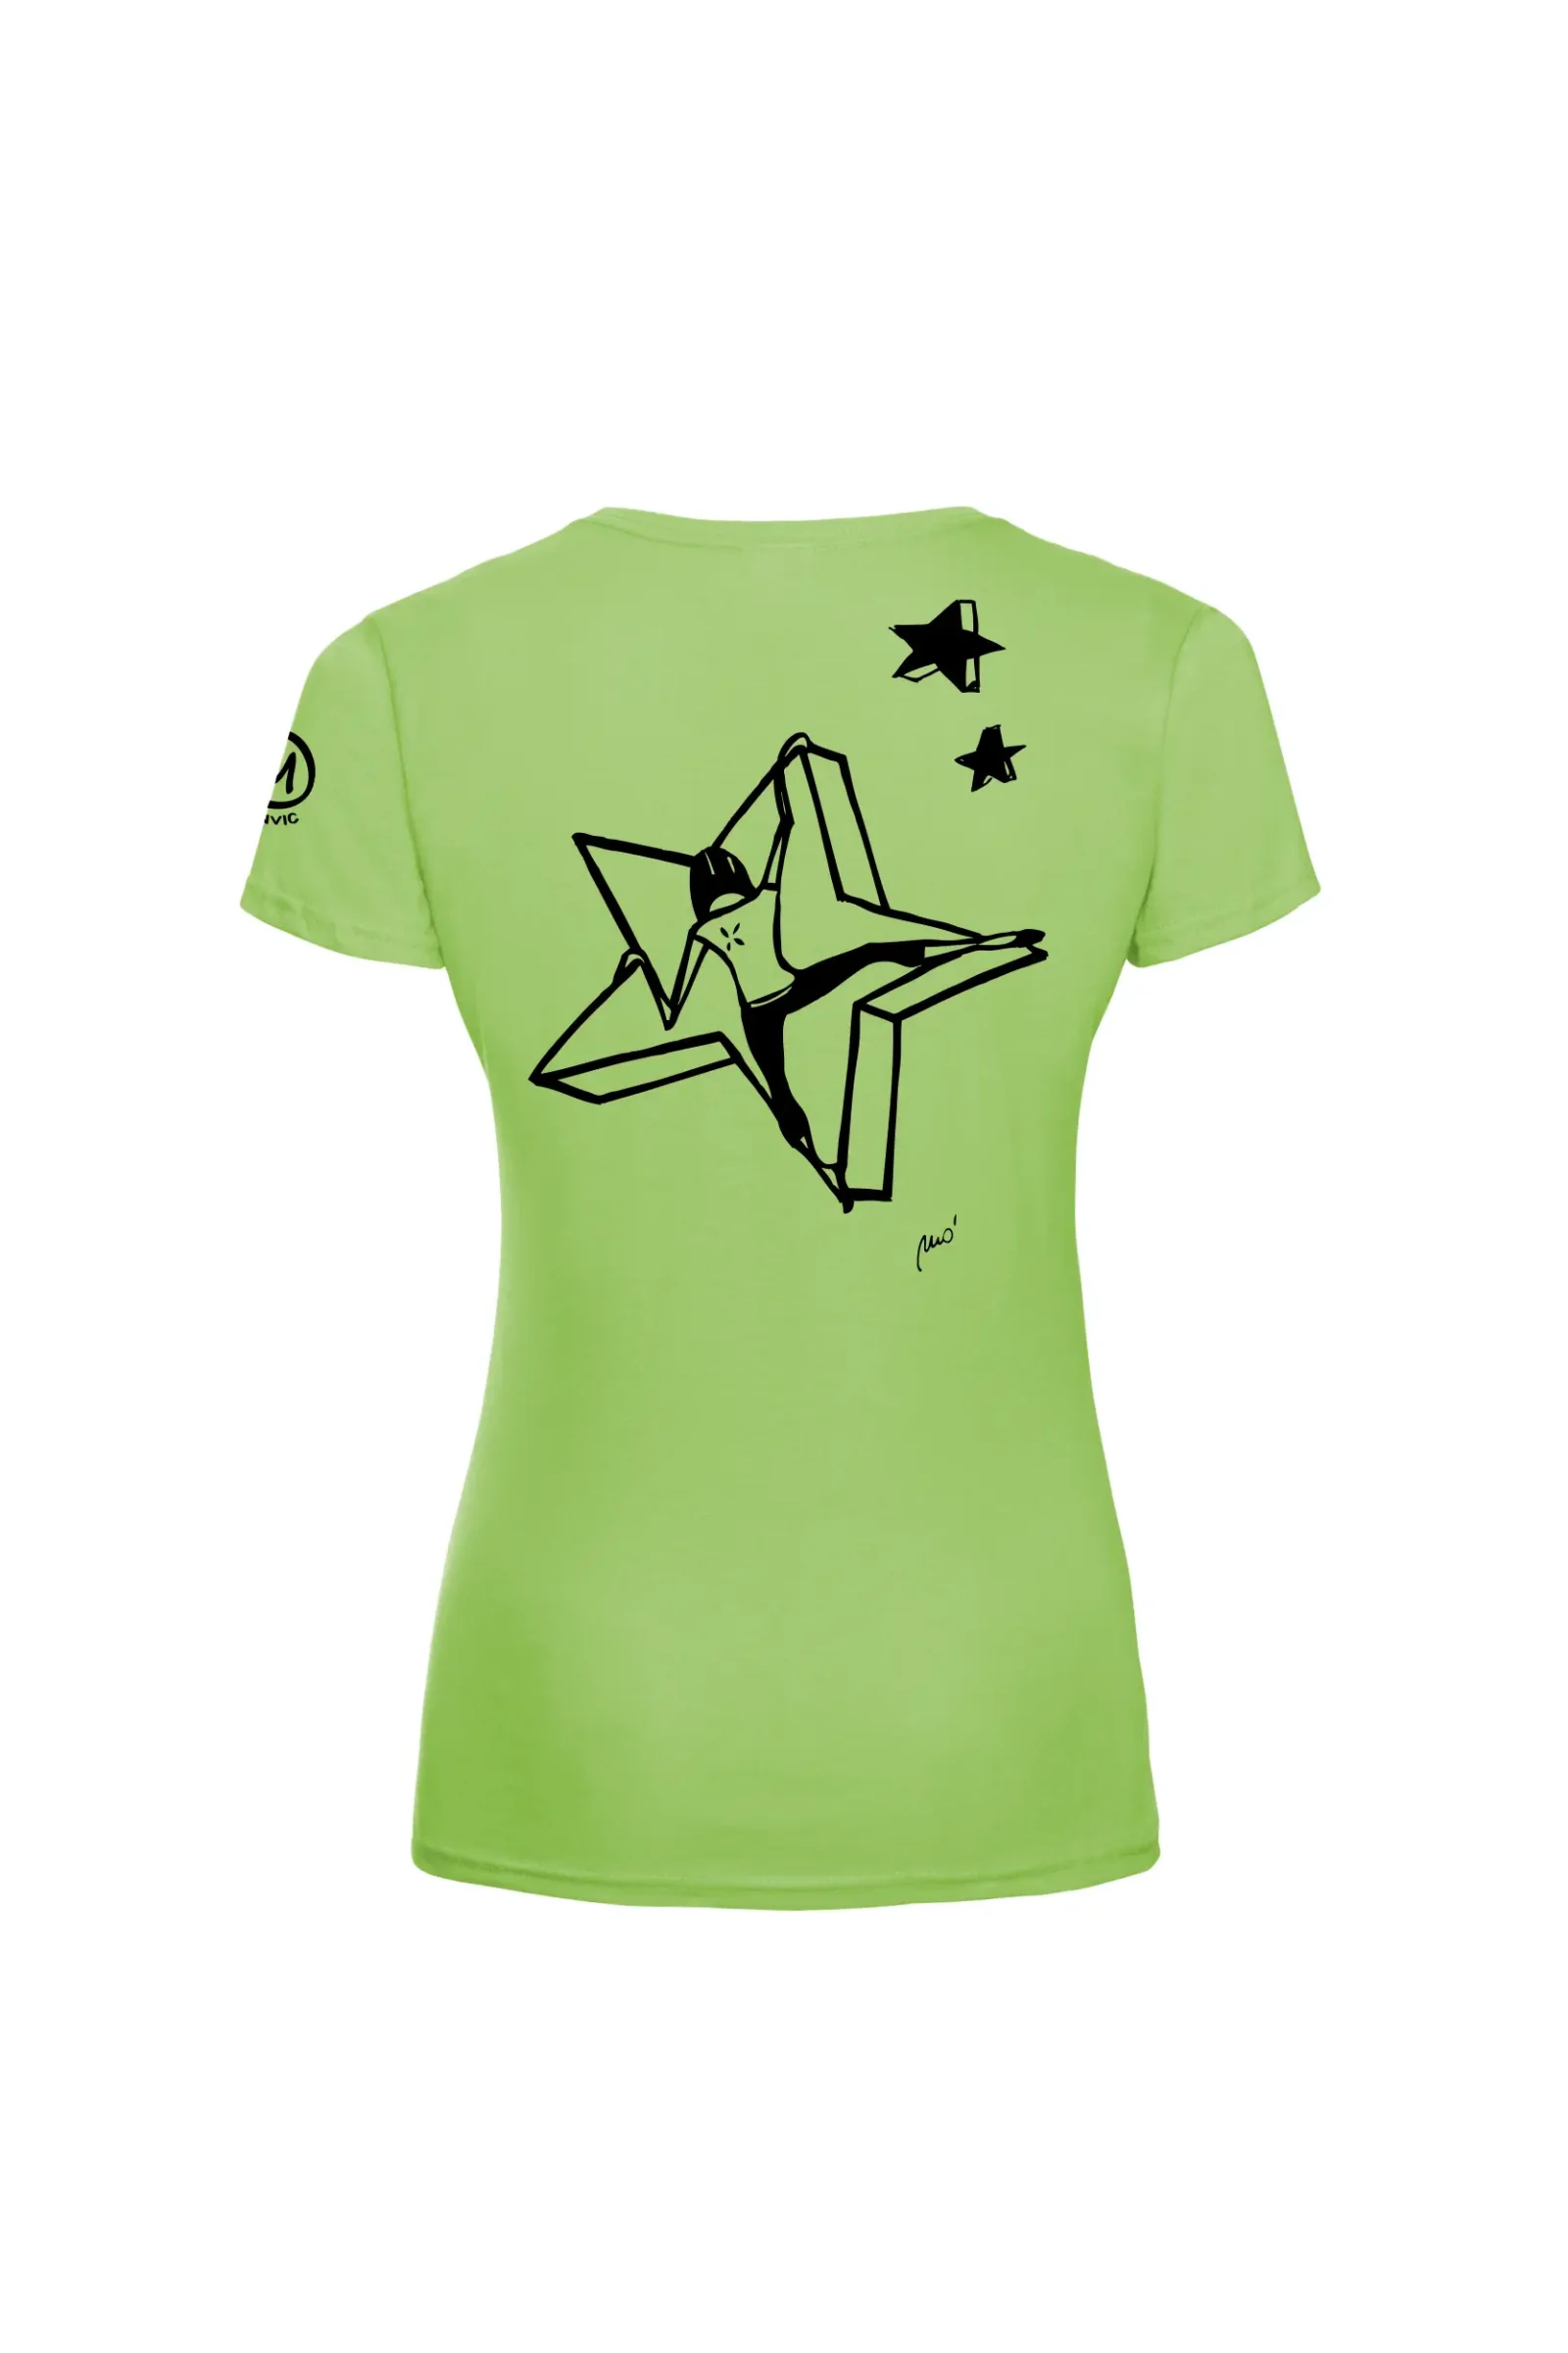 T-shirt escalade femme - coton vert anis - graphisme "Azi" - SHARON by MONVIC